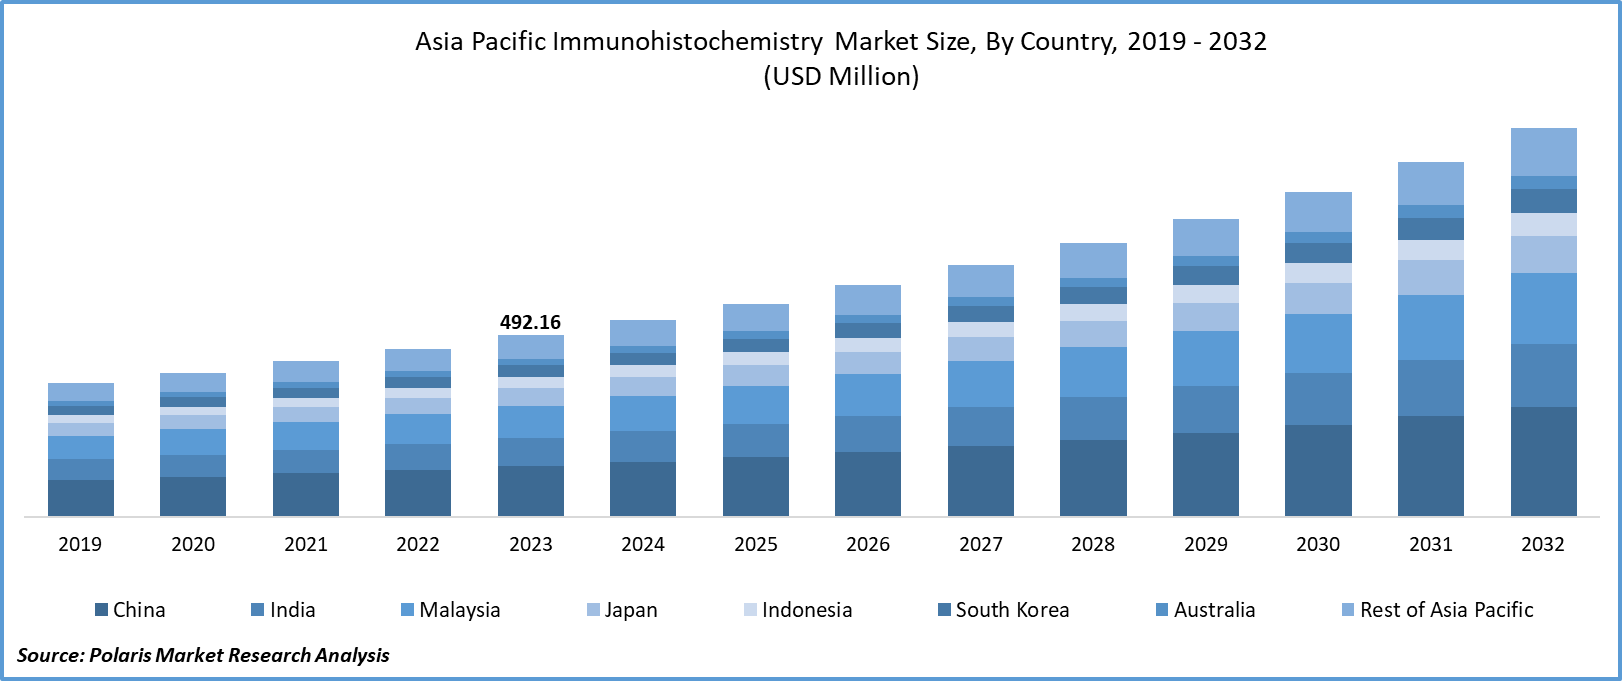 Asia Pacific Immunohistochemistry Market Size